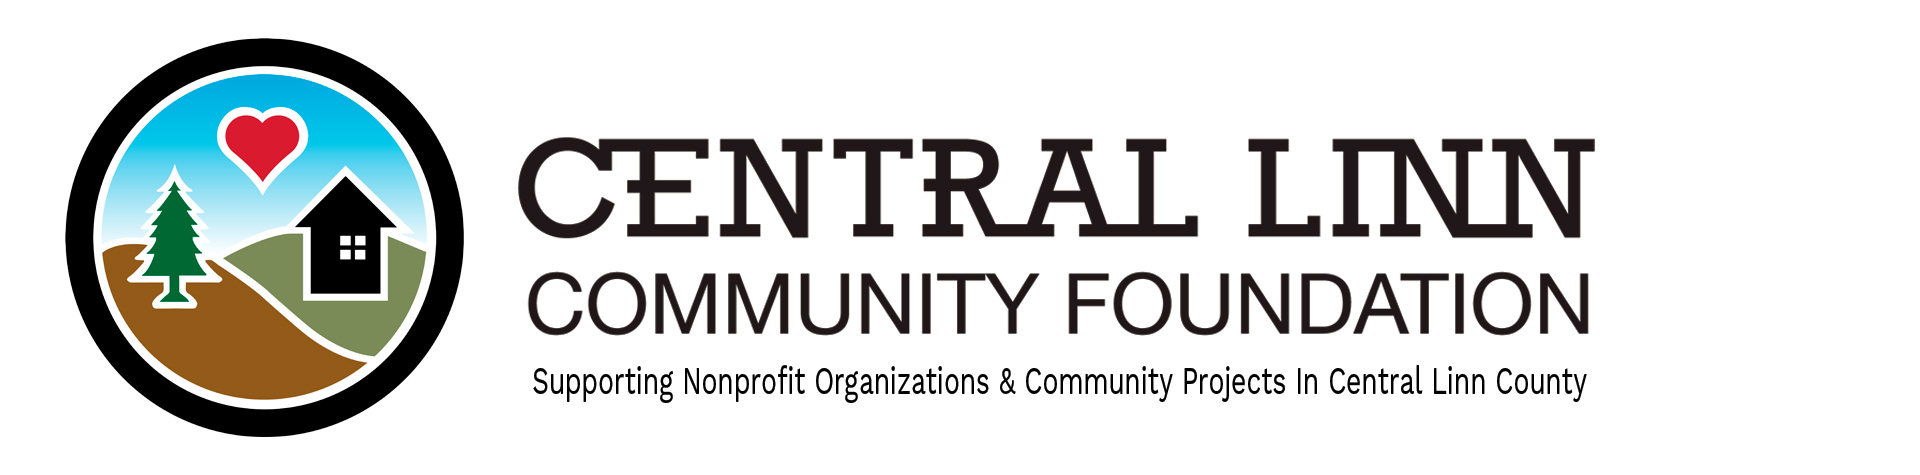 Central Linn Community Foundation logo